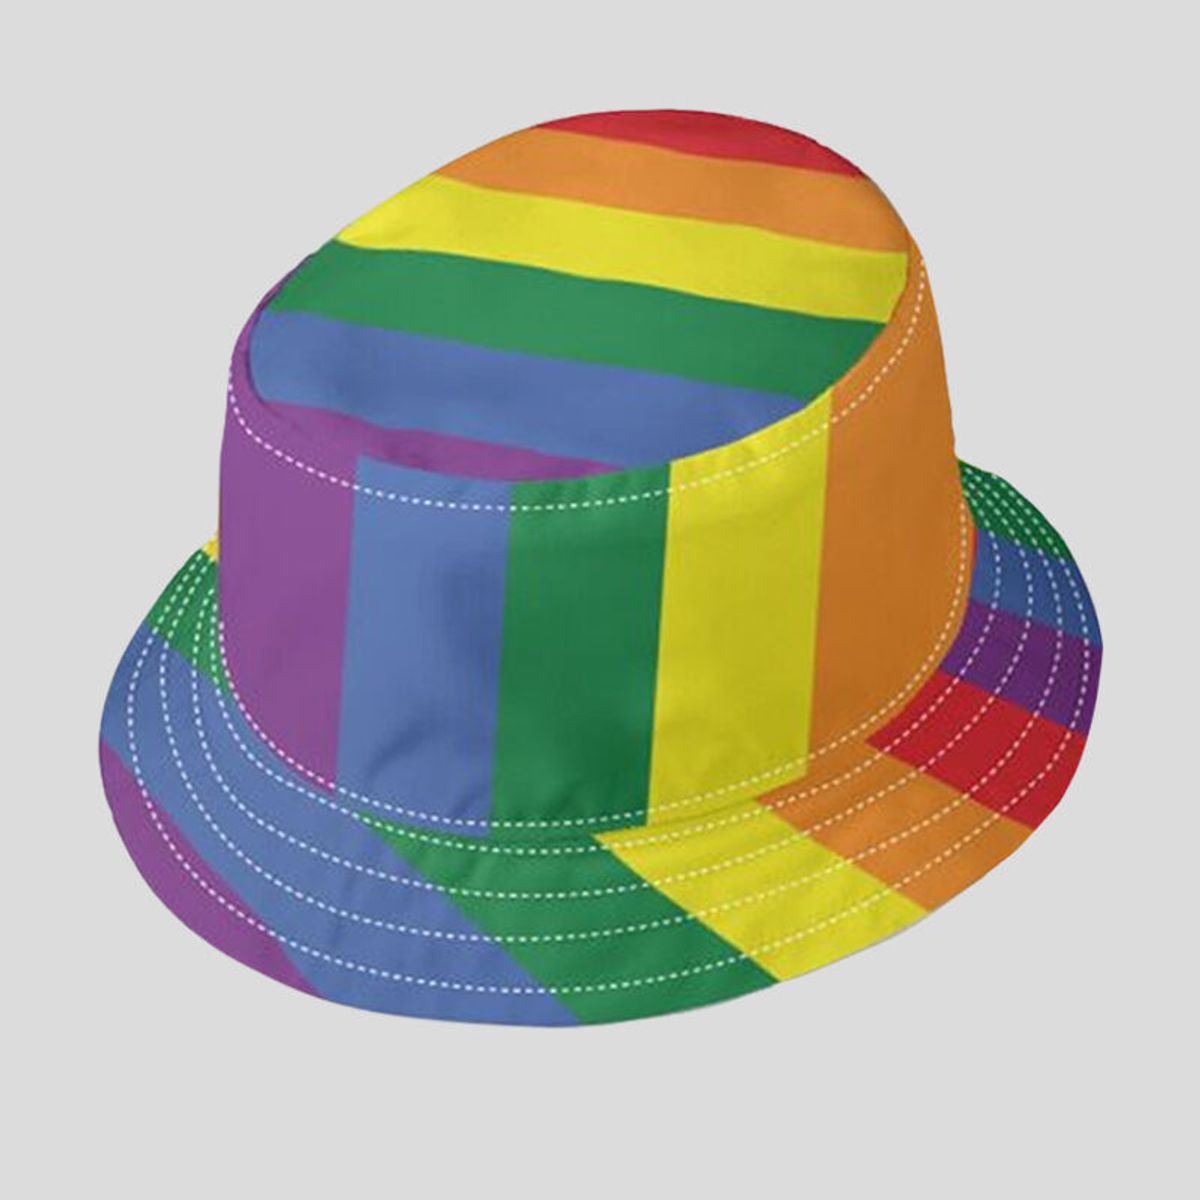  Custom Bucket Hat Digital Print Adjustable UPF 30+